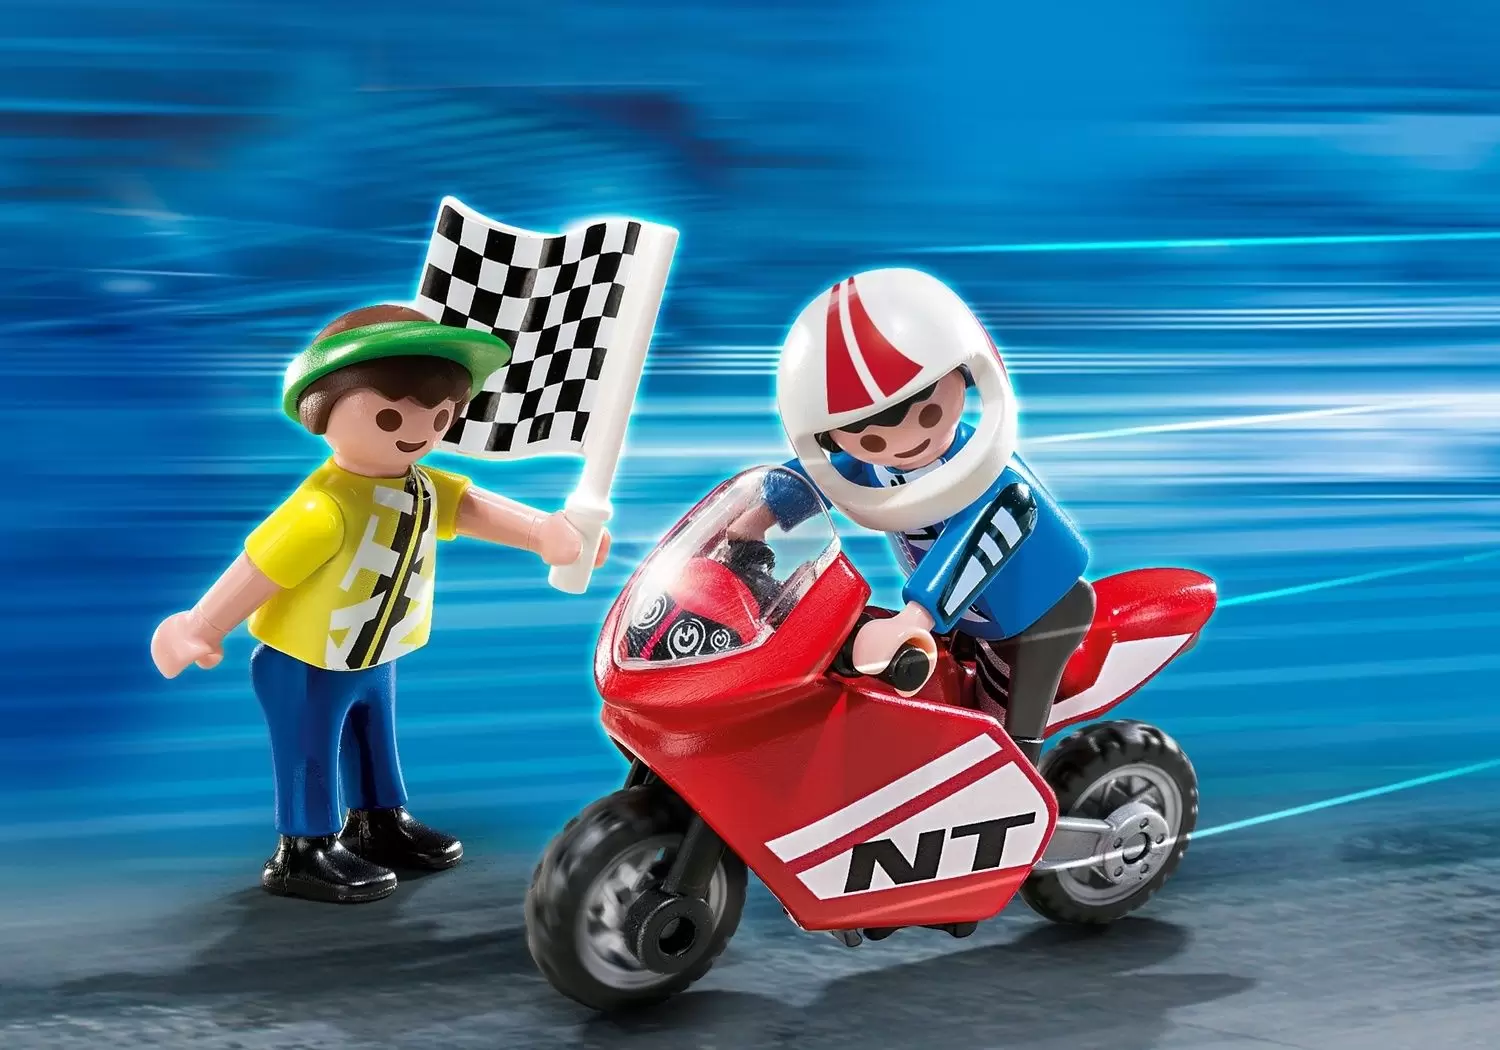 Playmobil SpecialPlus - Boys with Racing Bike Set